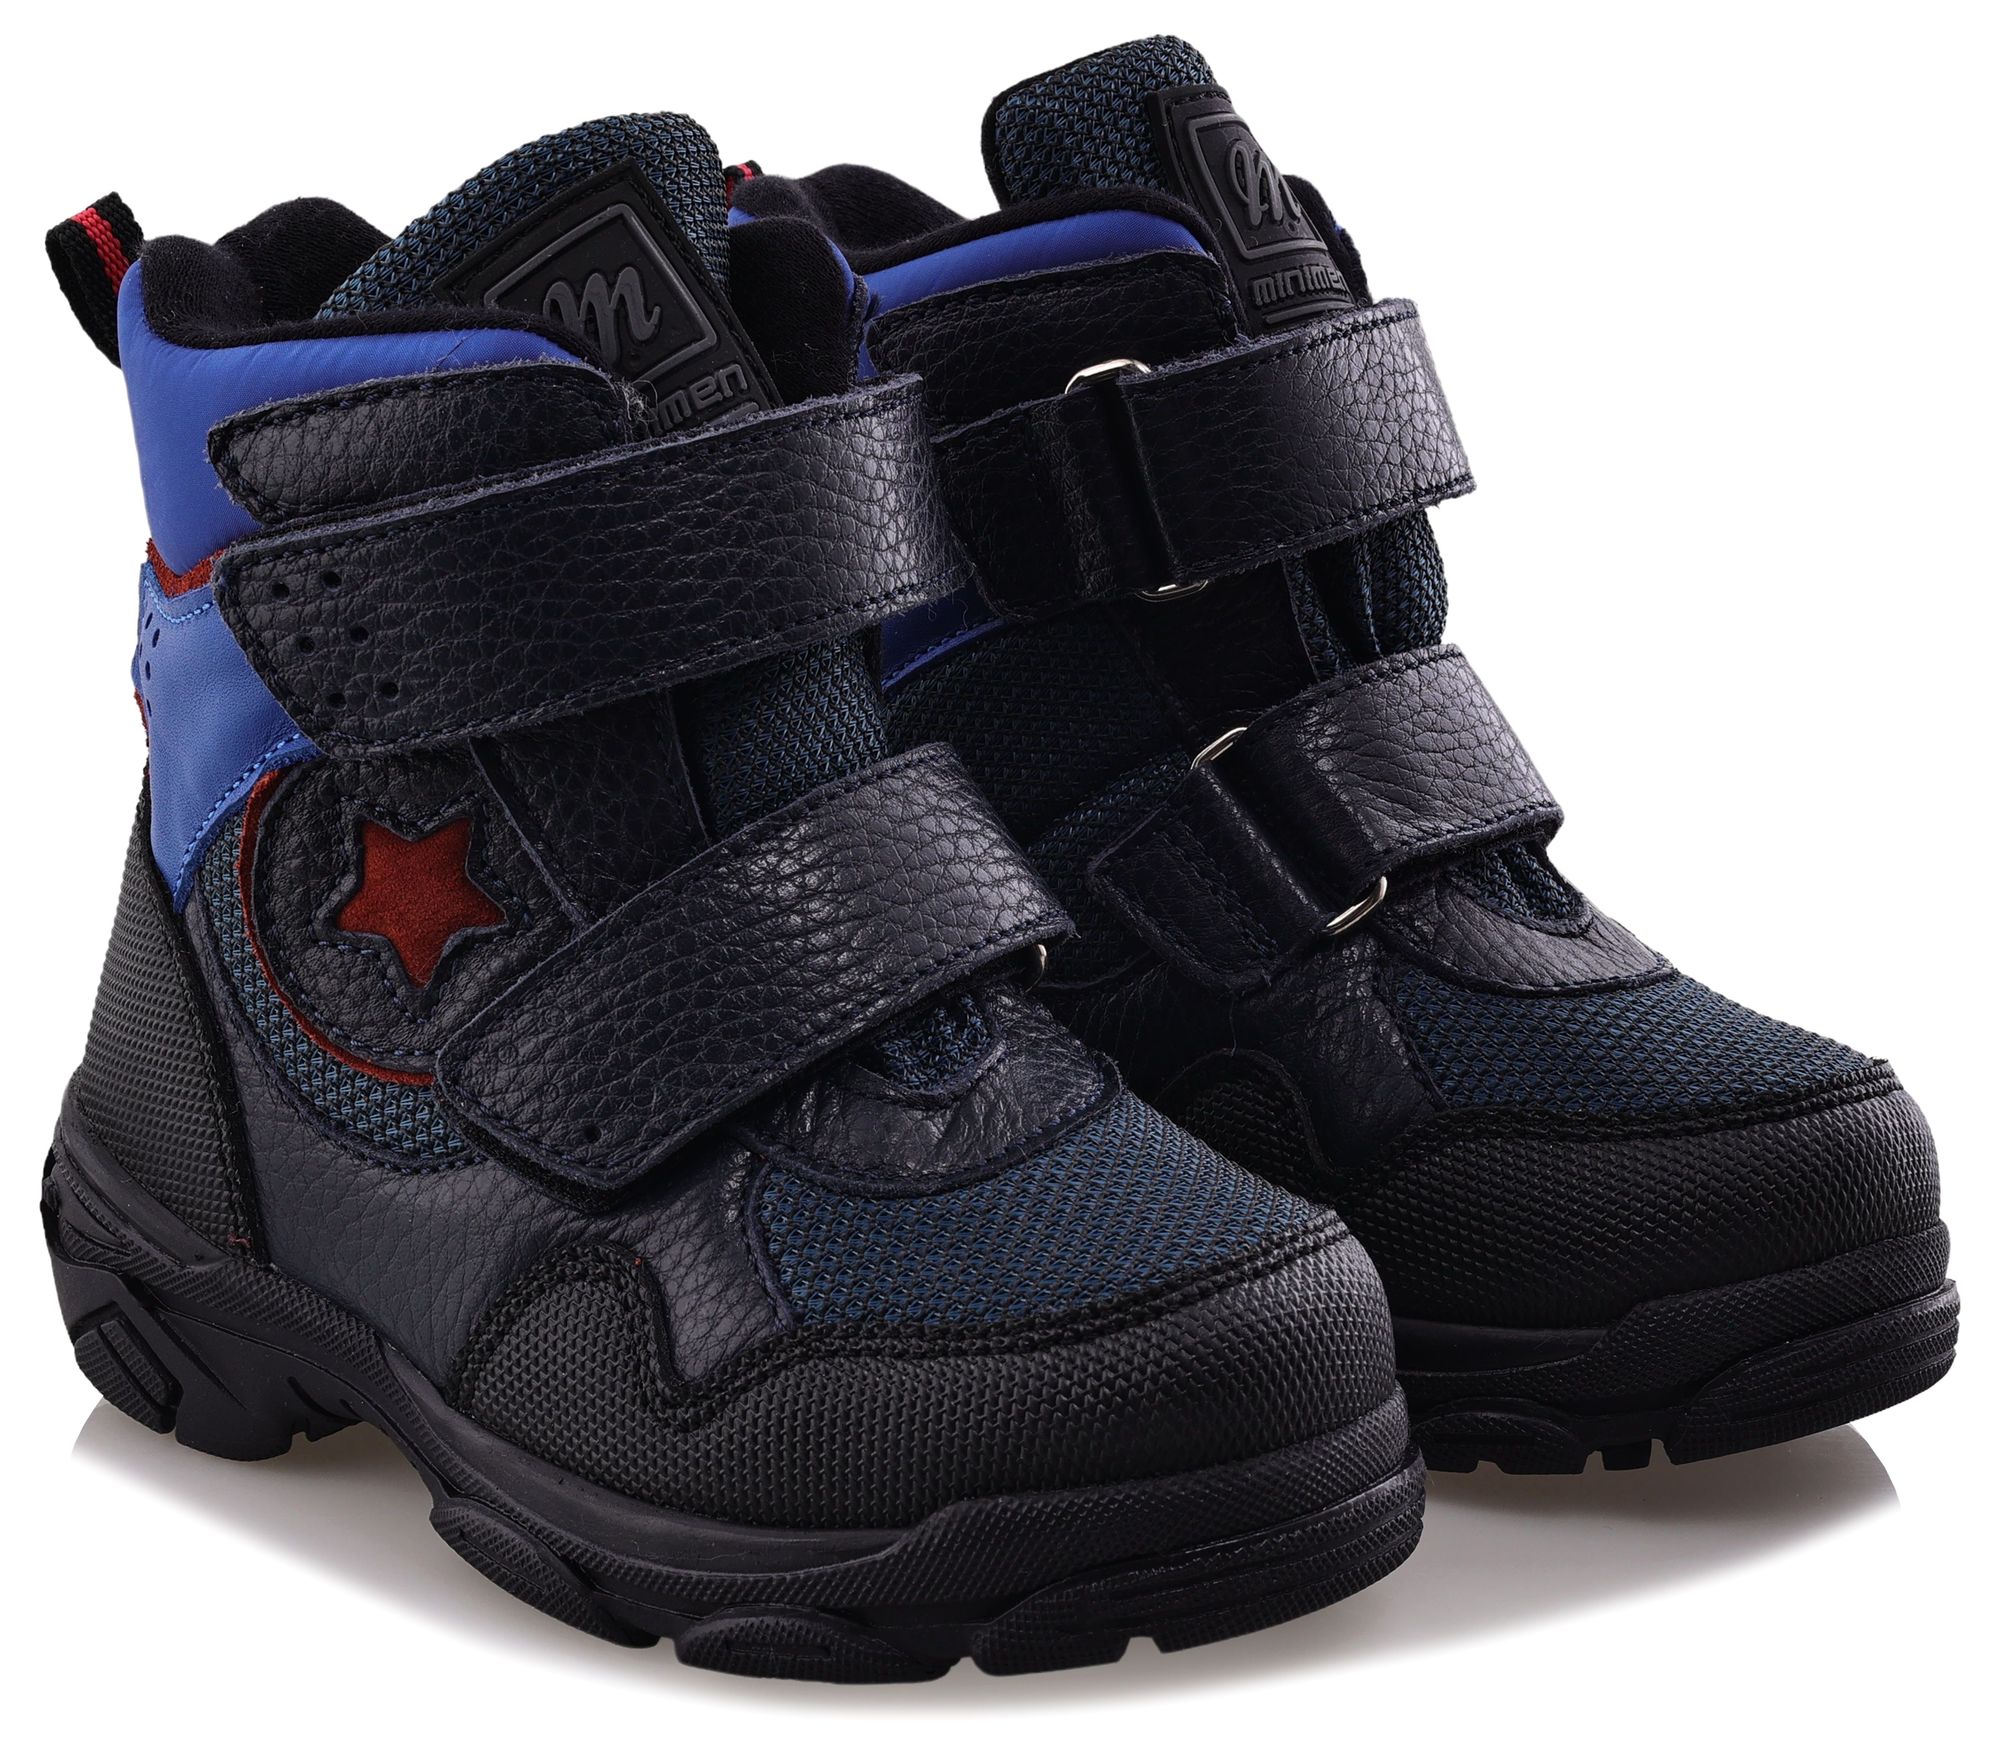 Ботинки Minimen для мальчиков, тёмно-синие, размер 27, 2658-63-23B-01 ботинки minimen для девочек сиреневые размер 29 2658 63 23b 04